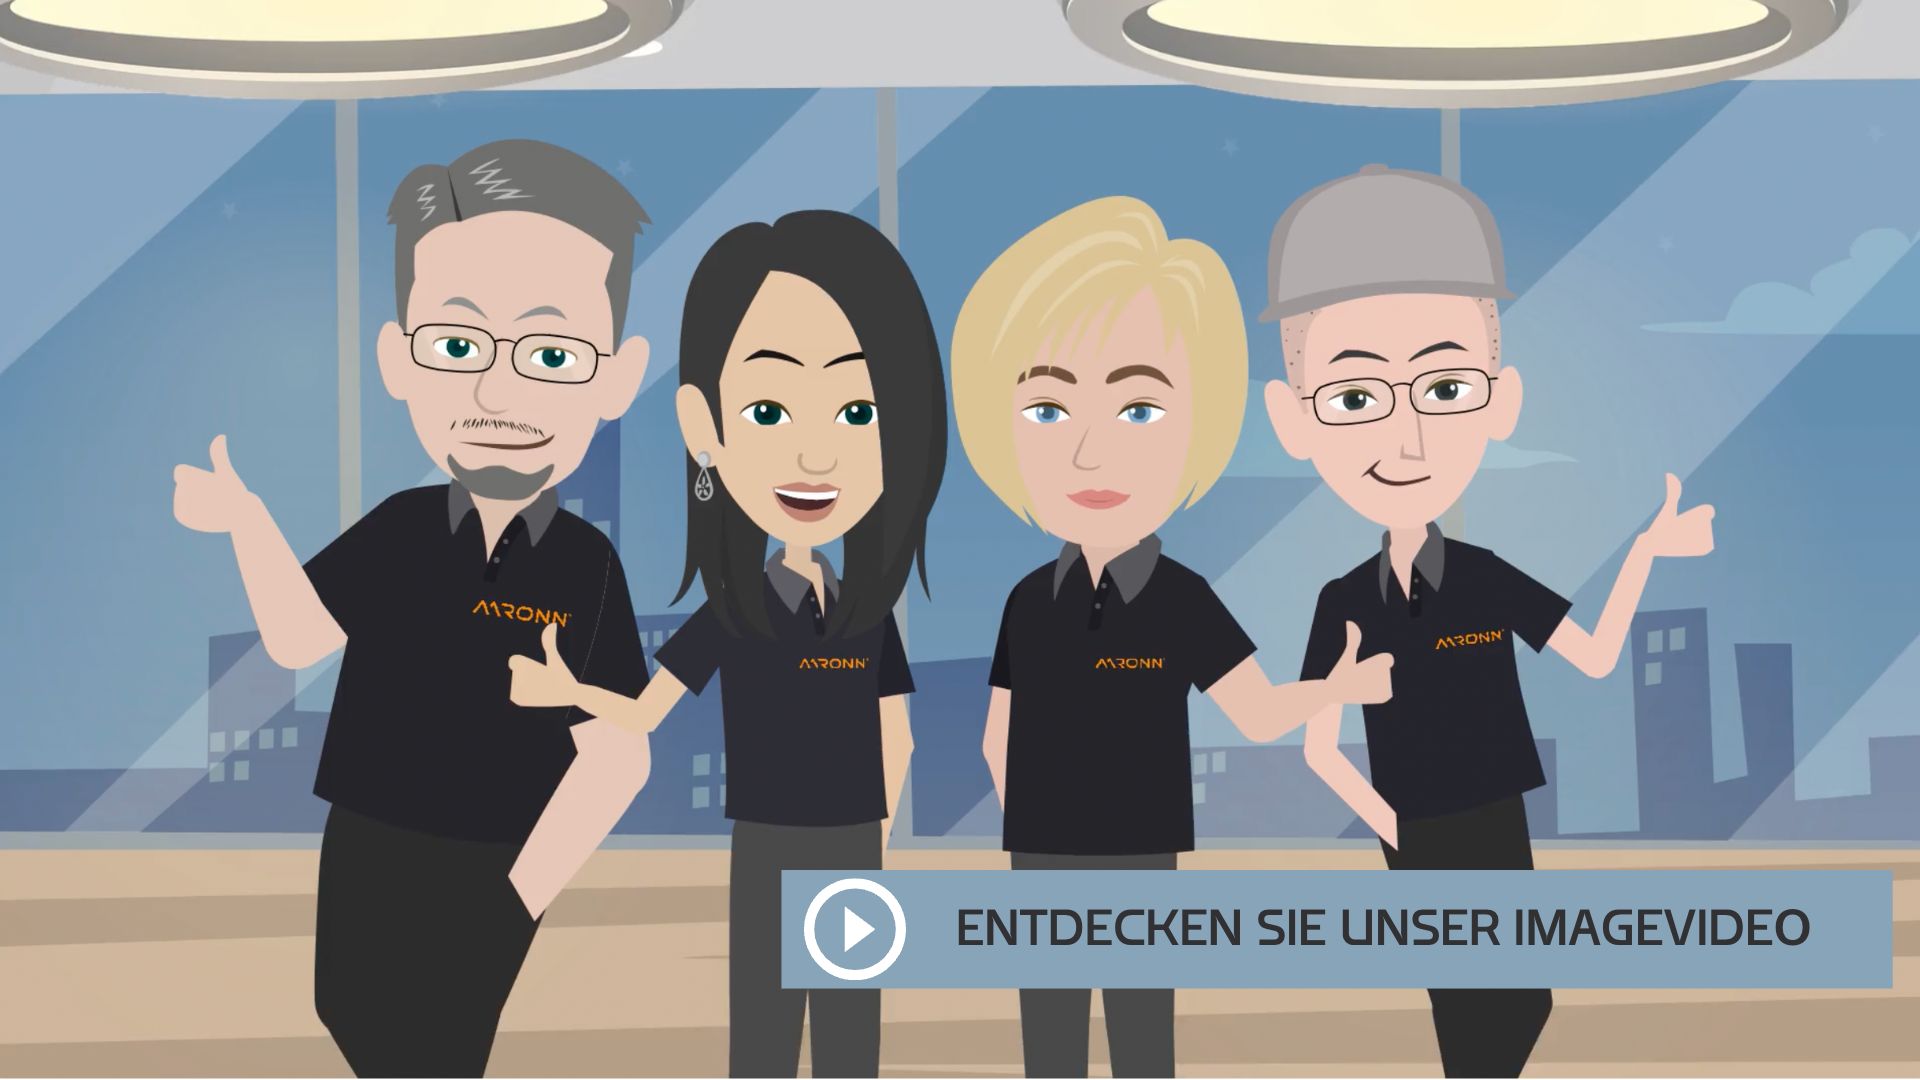 You are currently viewing Aaronn Electronic GmbH feiert 30-jähriges Bestehen und präsentiert neues Imagevideo